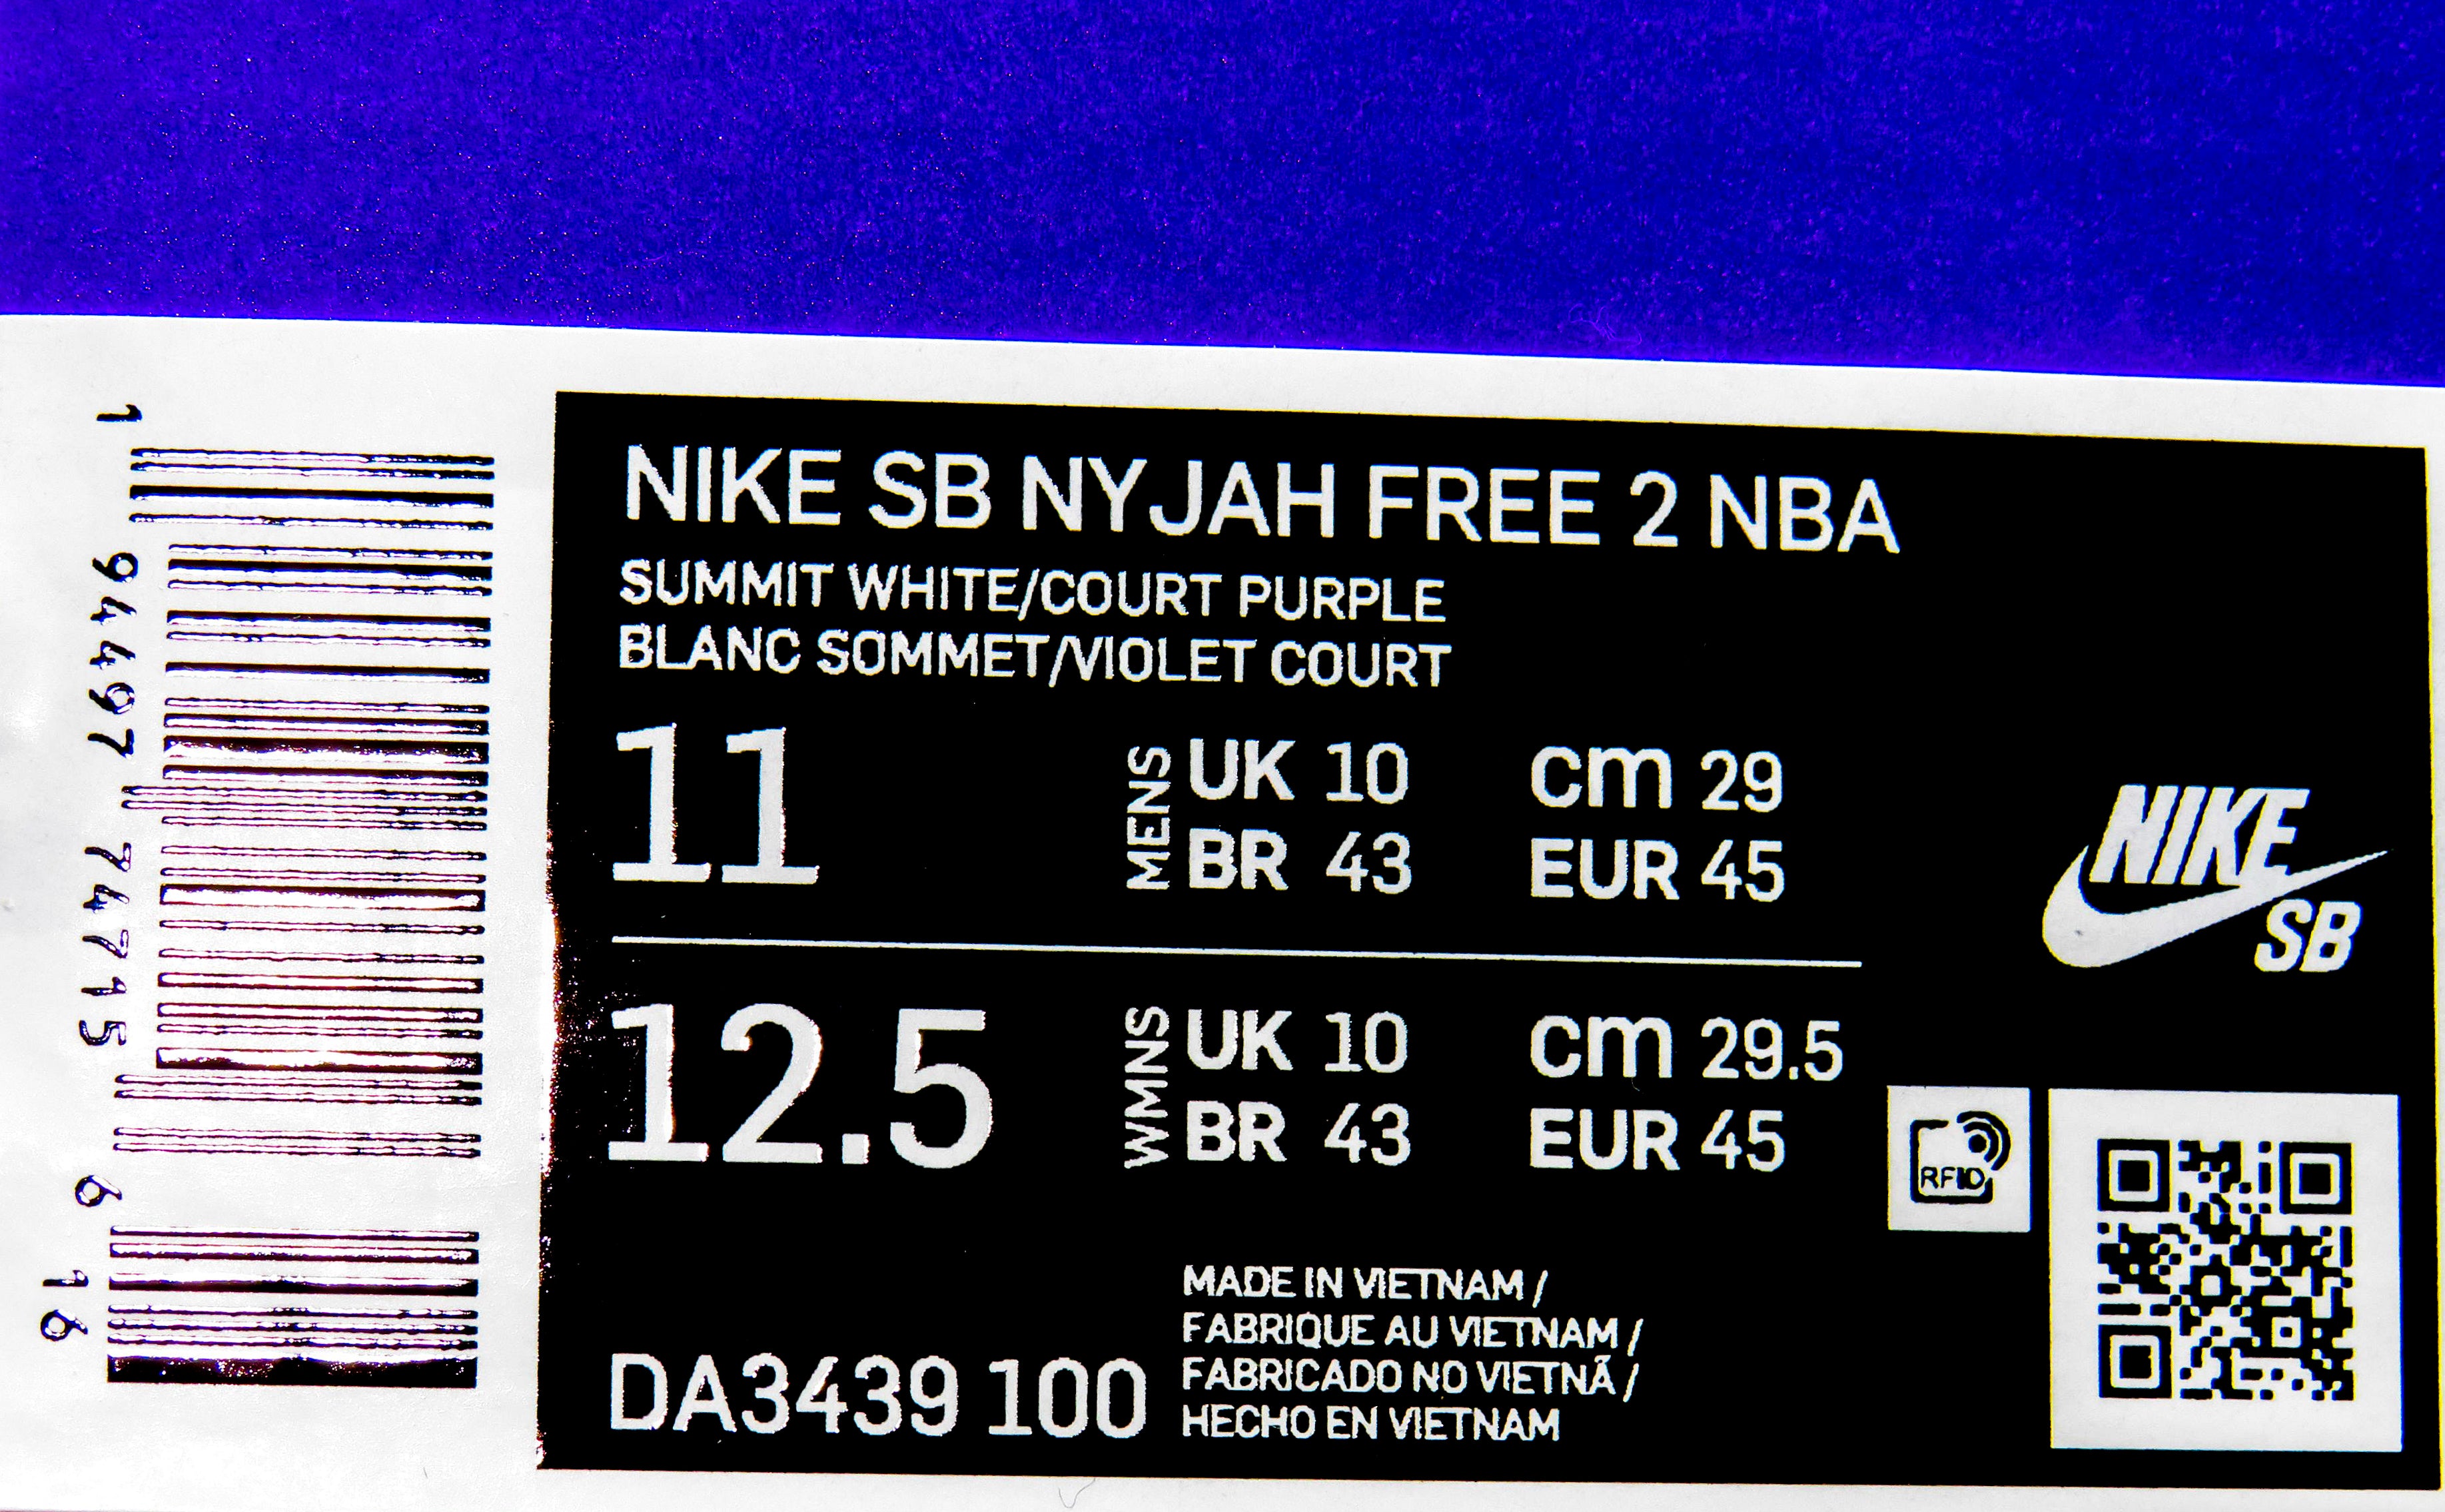 Nike SB Nyjah Free 2 shoe nba Los Angeles Lakers collaboration